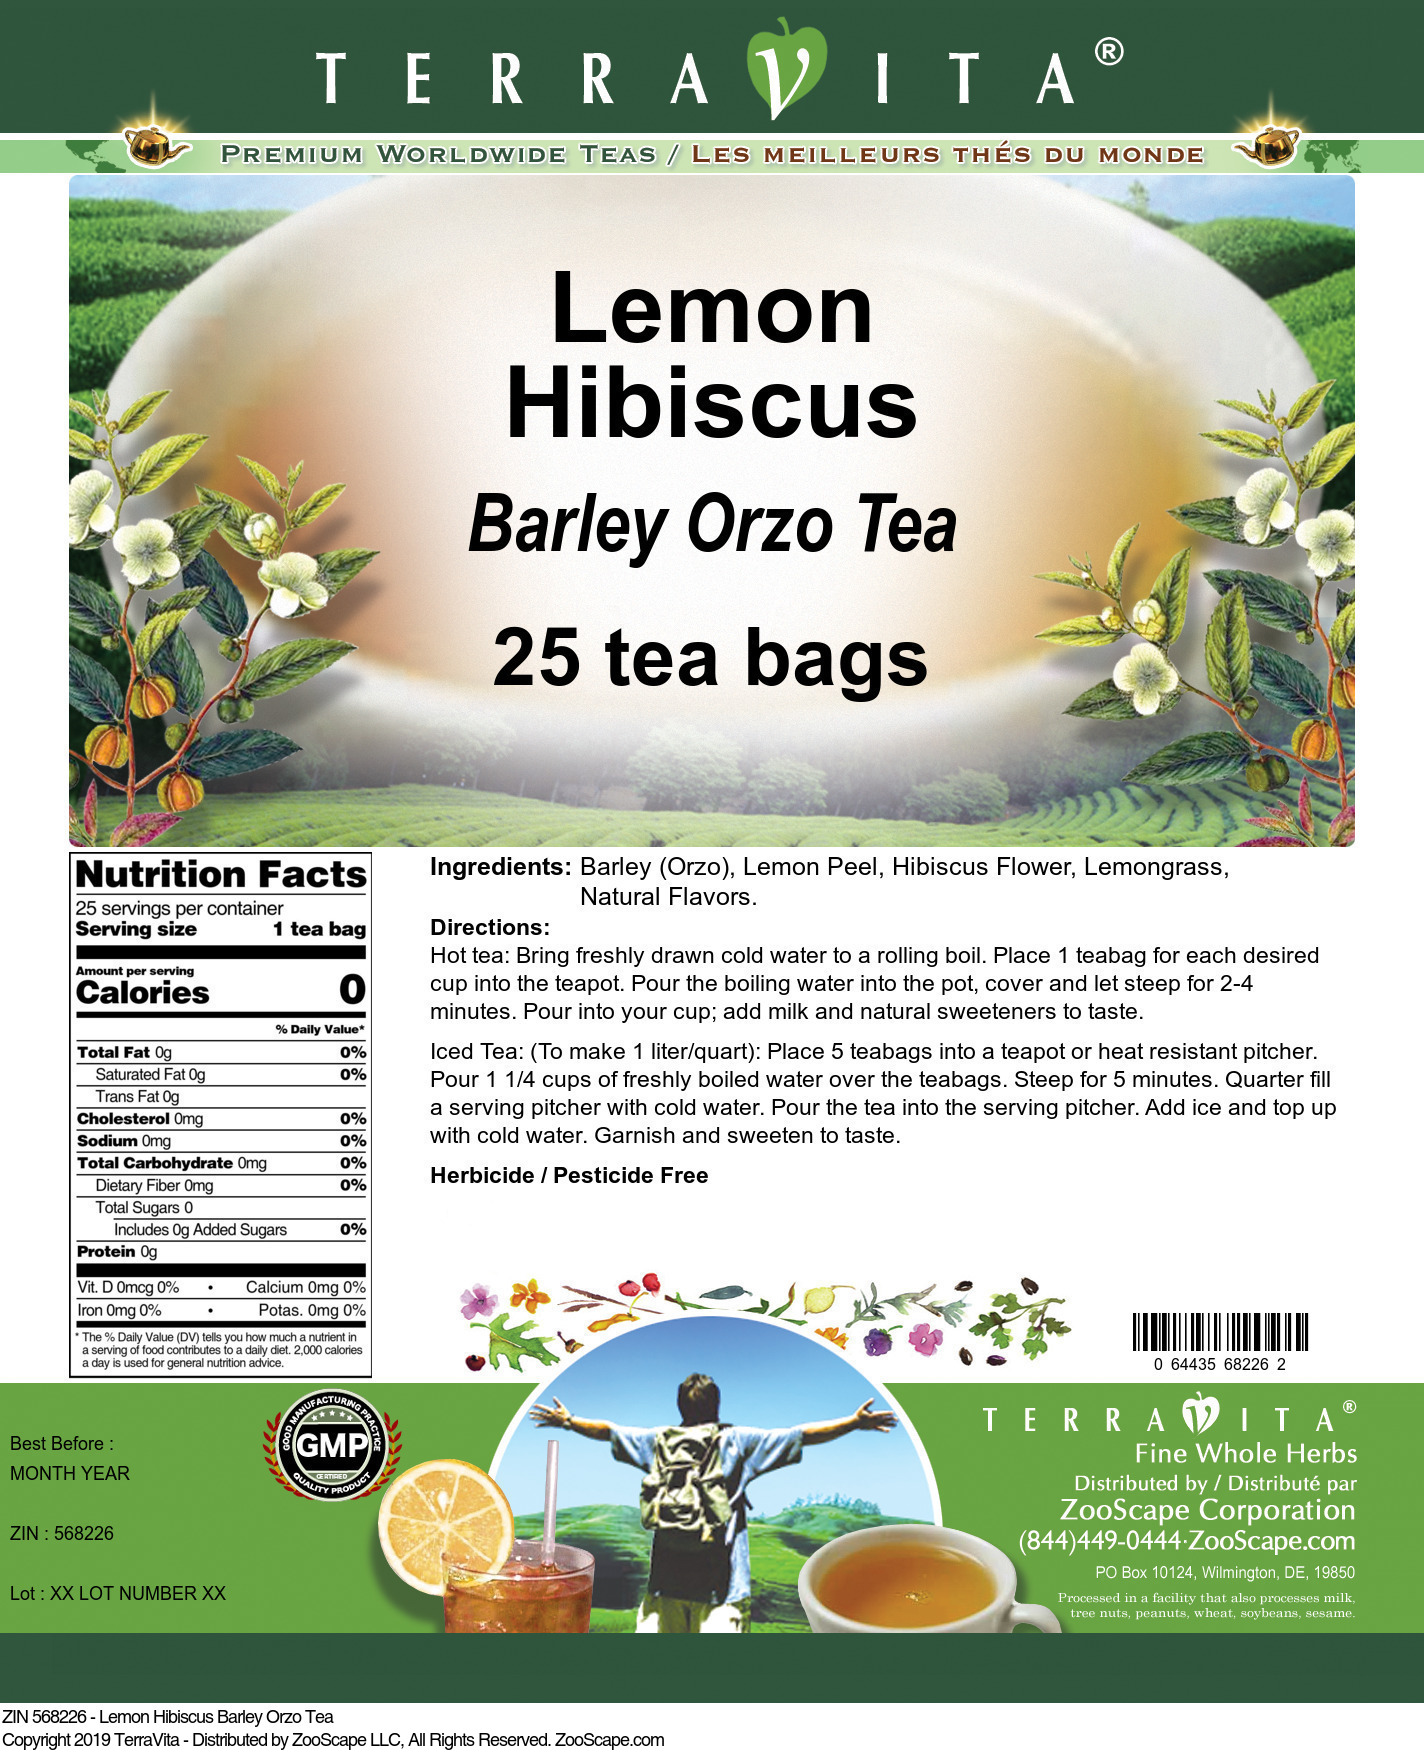 Lemon Hibiscus Barley Orzo Tea - Label